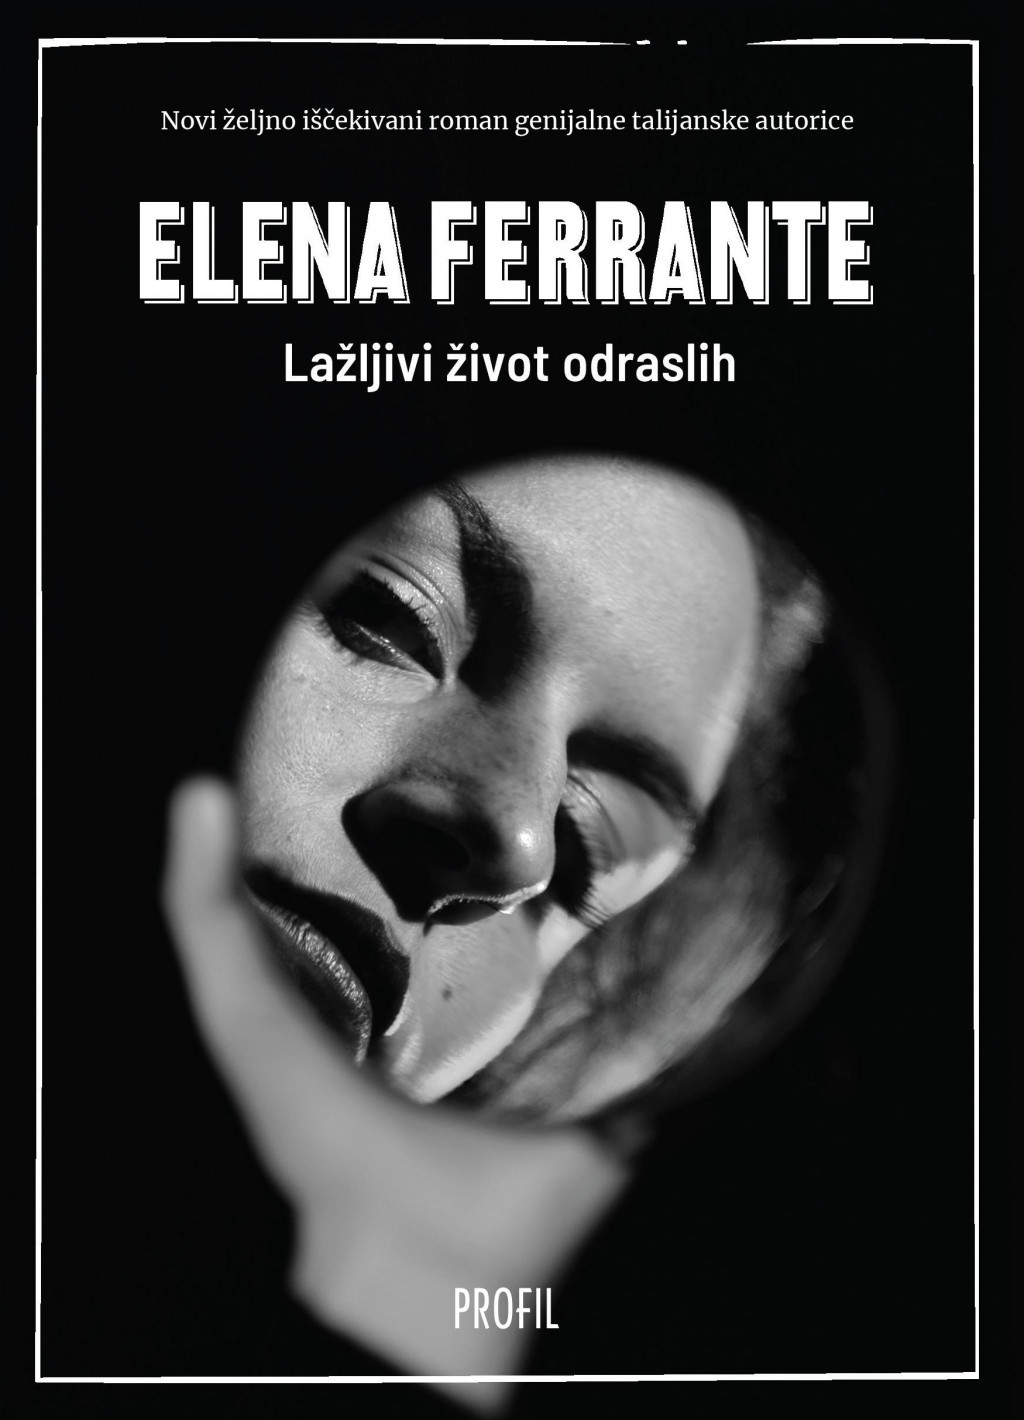 Naslovnica knjige Elene Ferrante